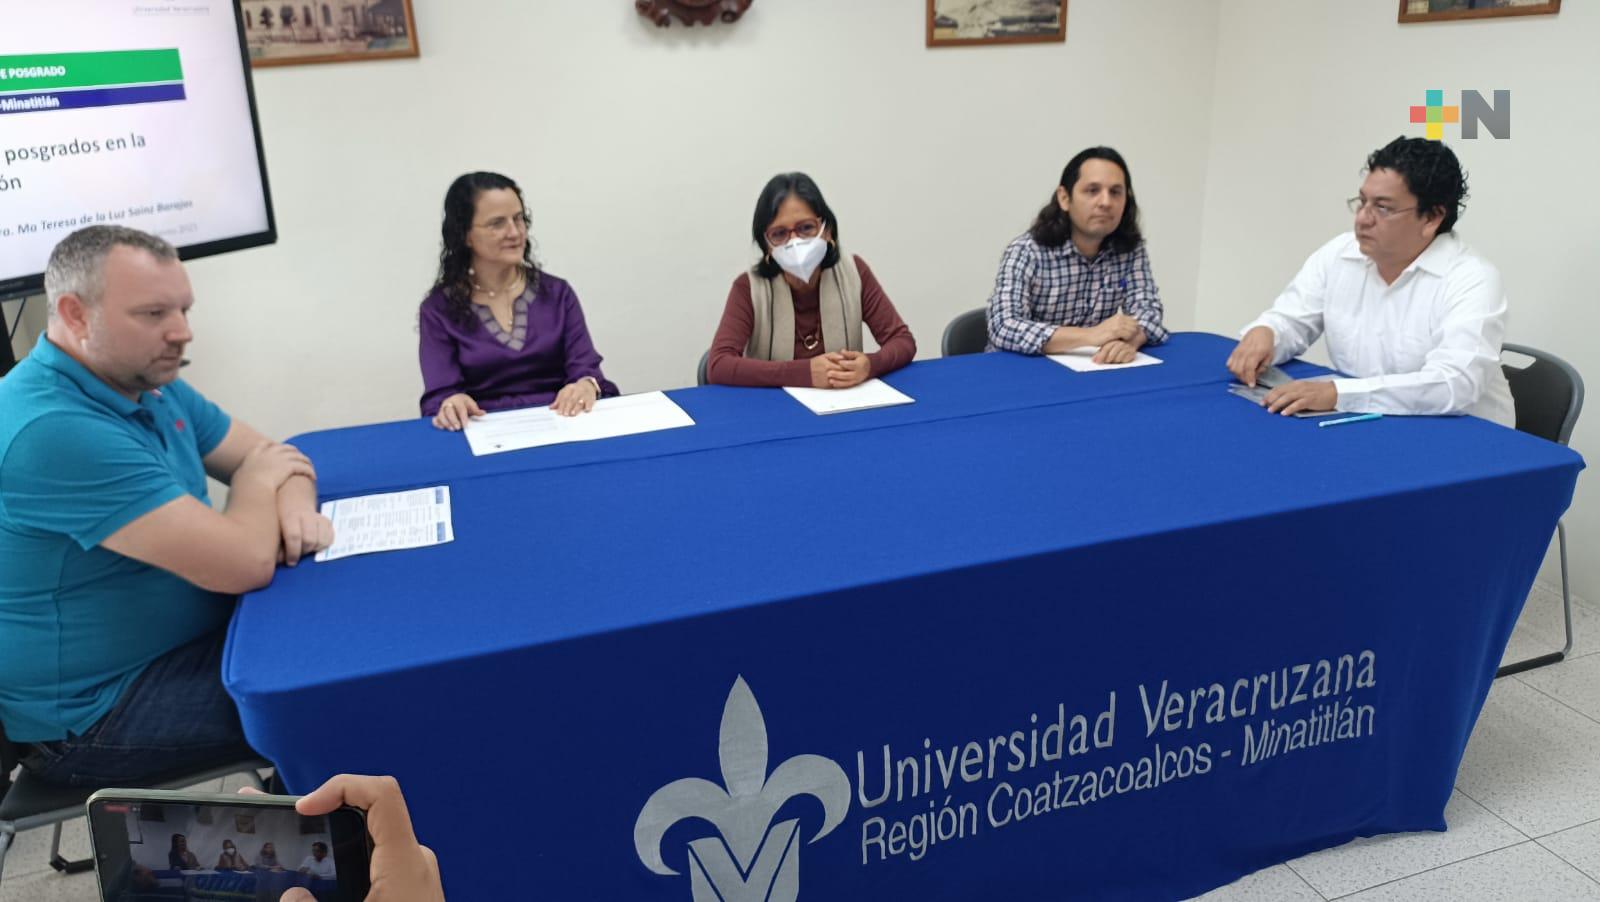 UV campus Coatzacoalcos – Minatitlán presentó oferta educativa de posgrados